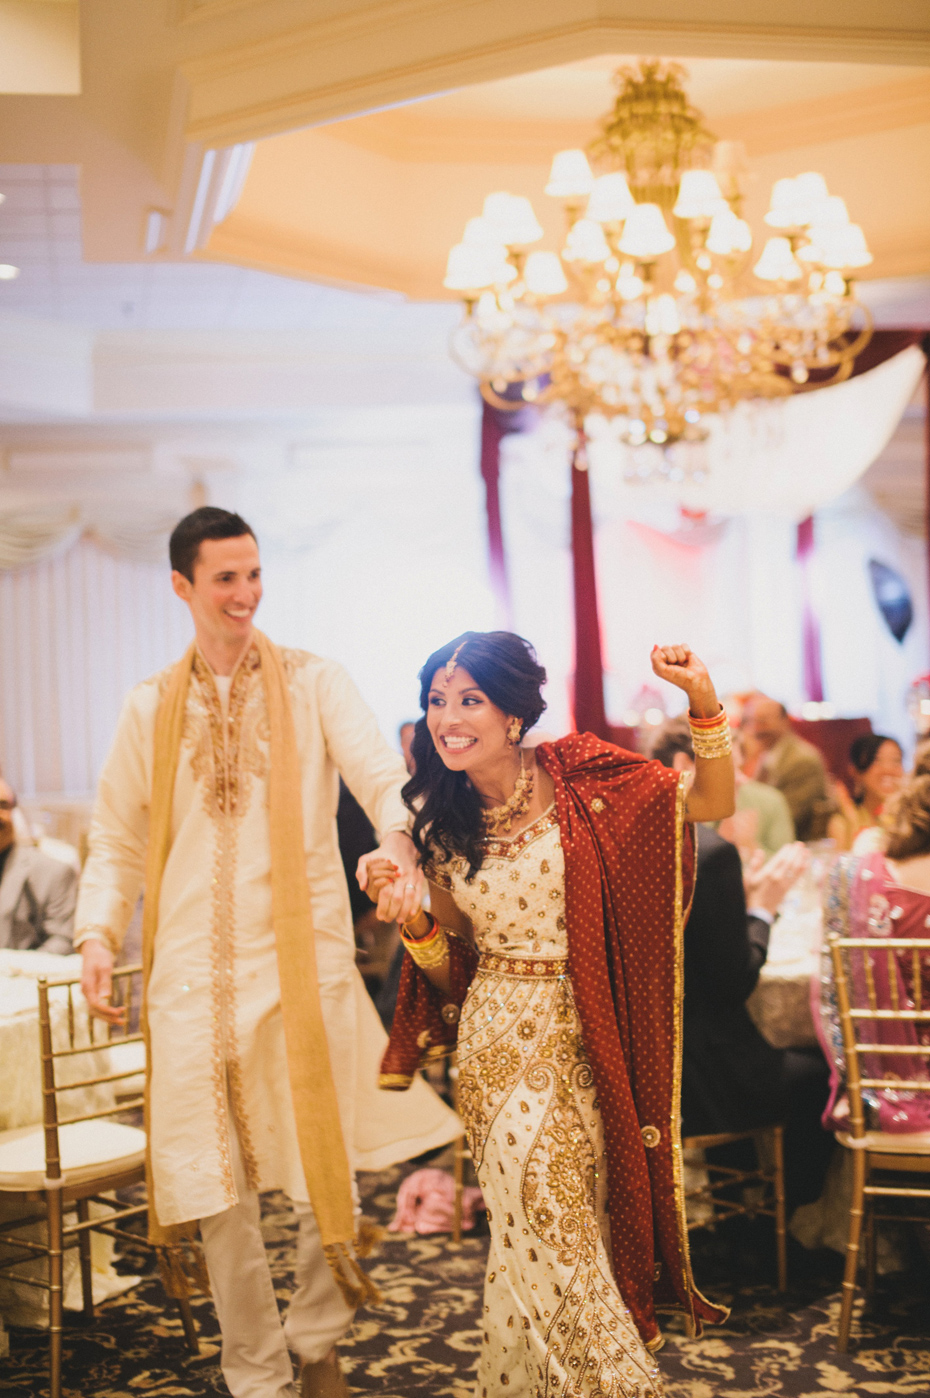 The bride and groom enter their hindu wedding reception, by Ann Arbor wedding photographer Heather Jowett.